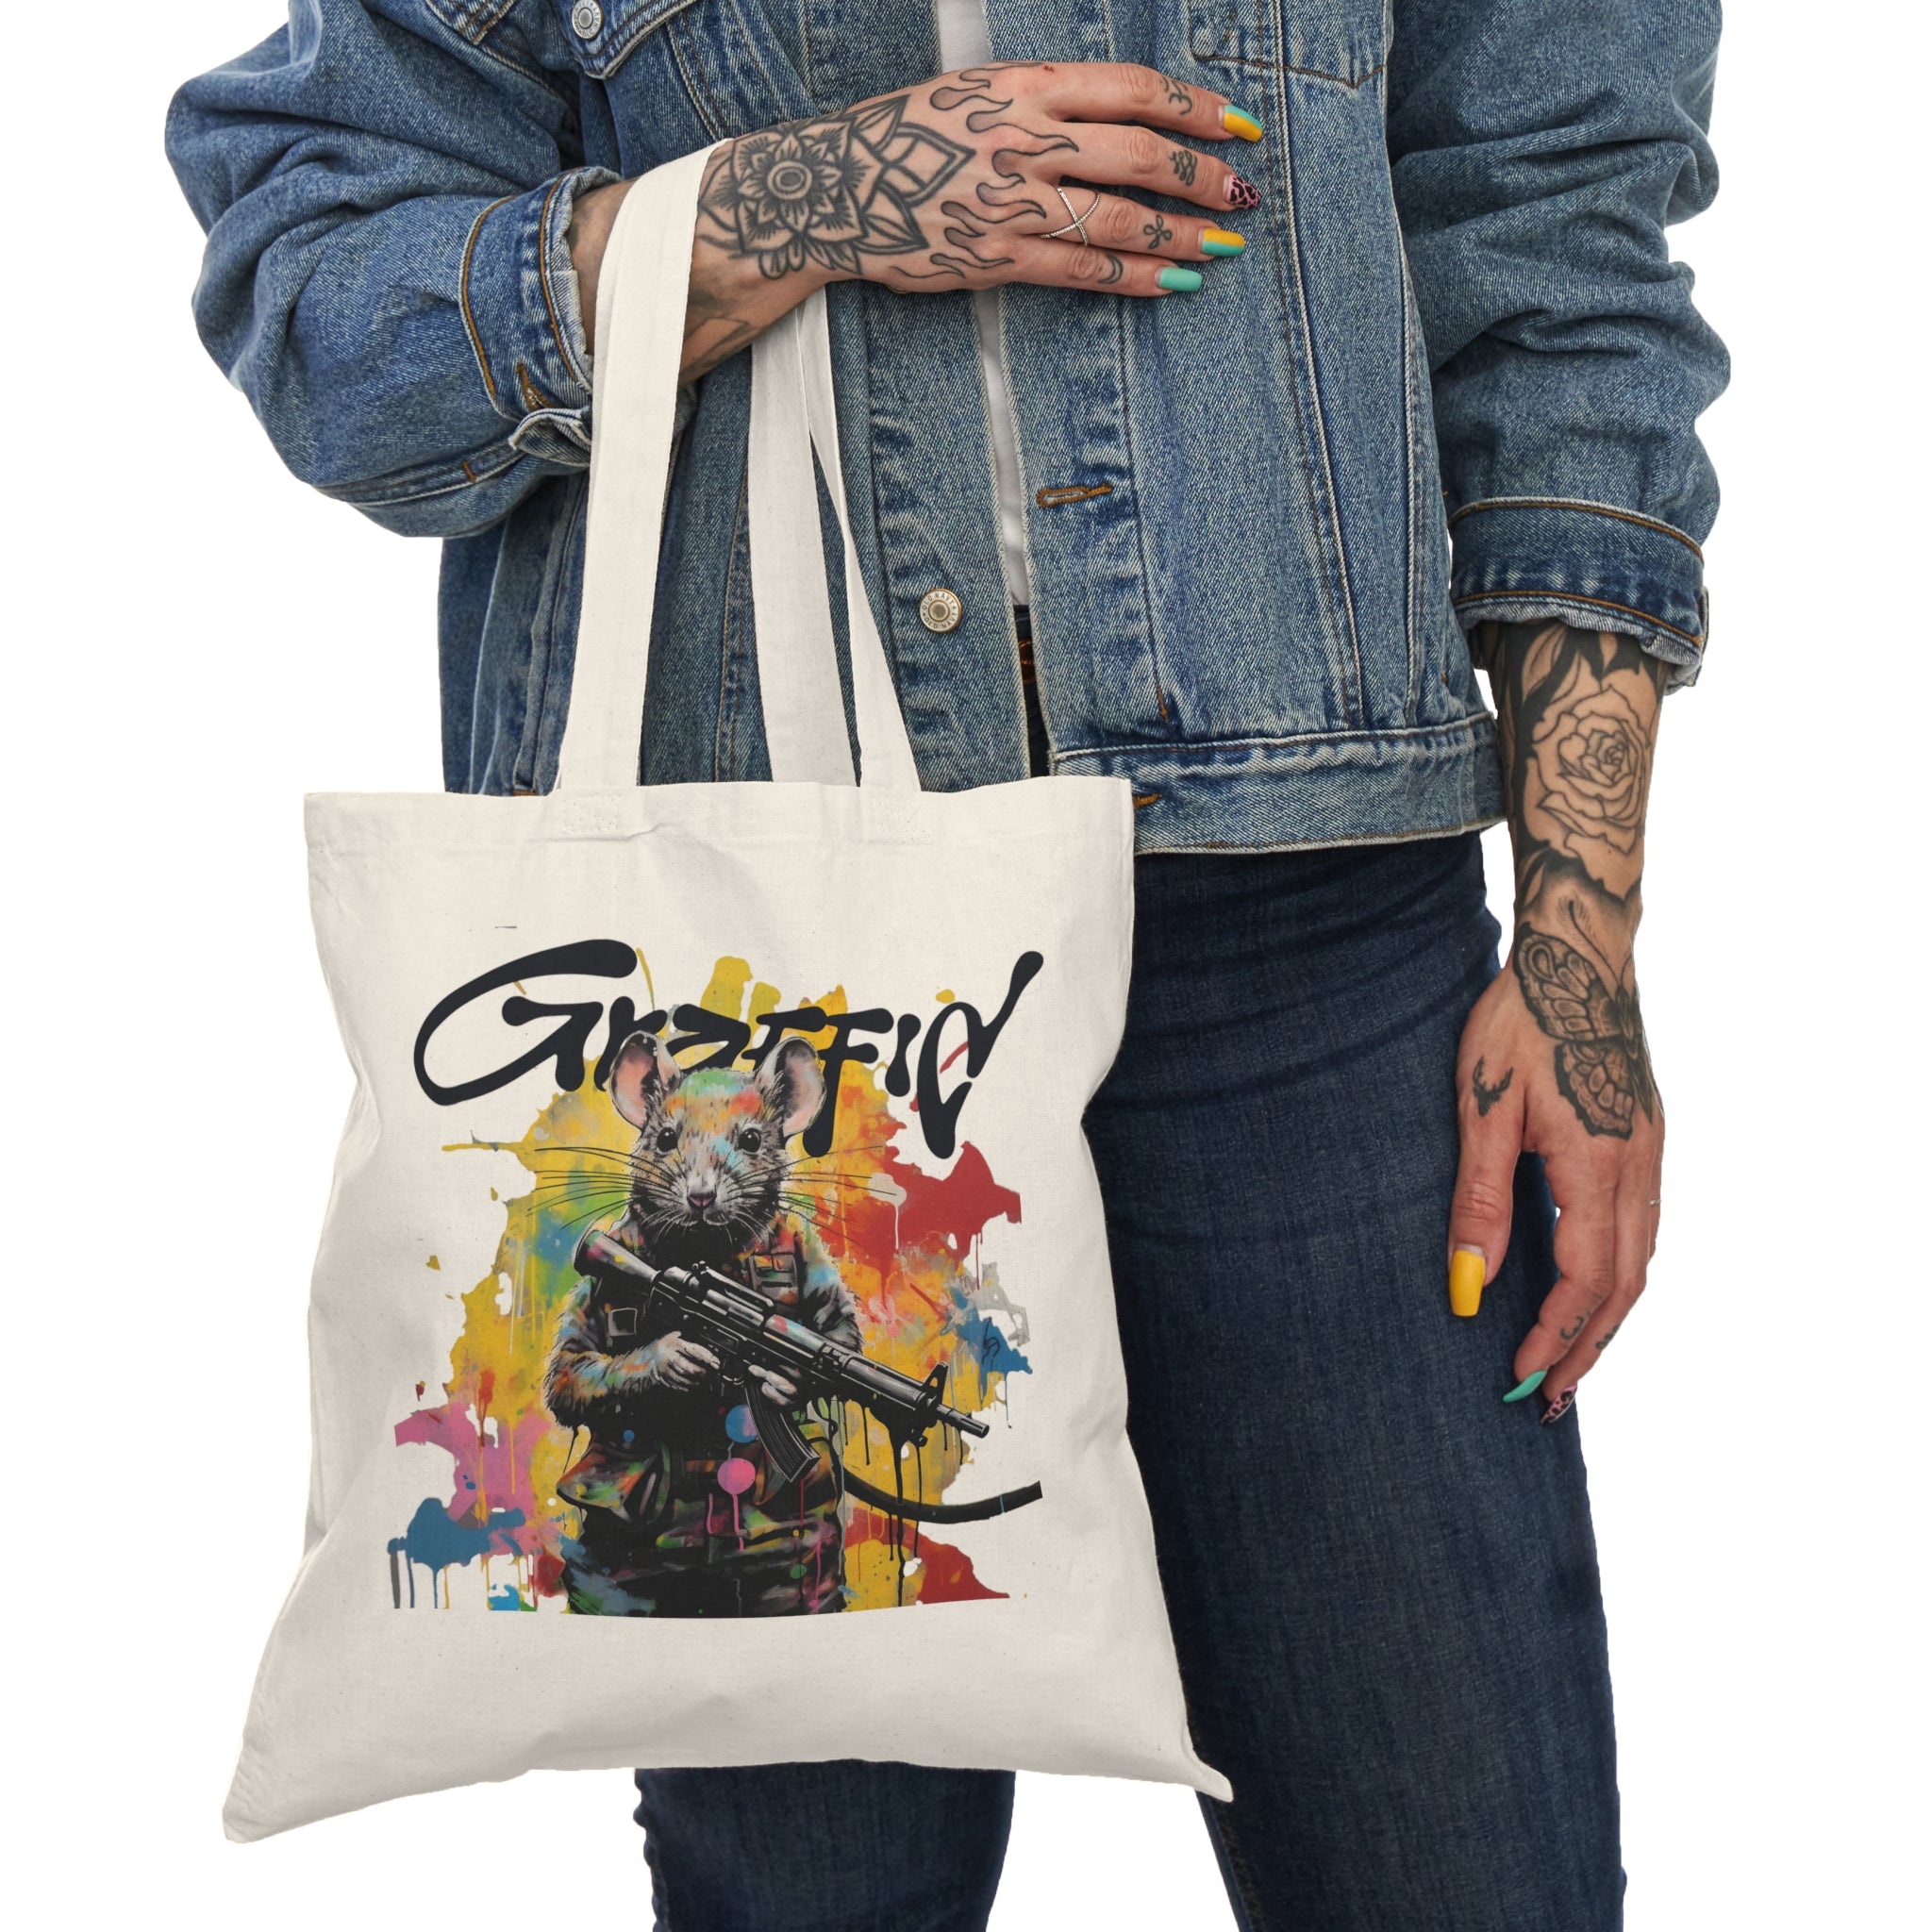 Graffid Tote Bag: 'Make Art Not War' Edition